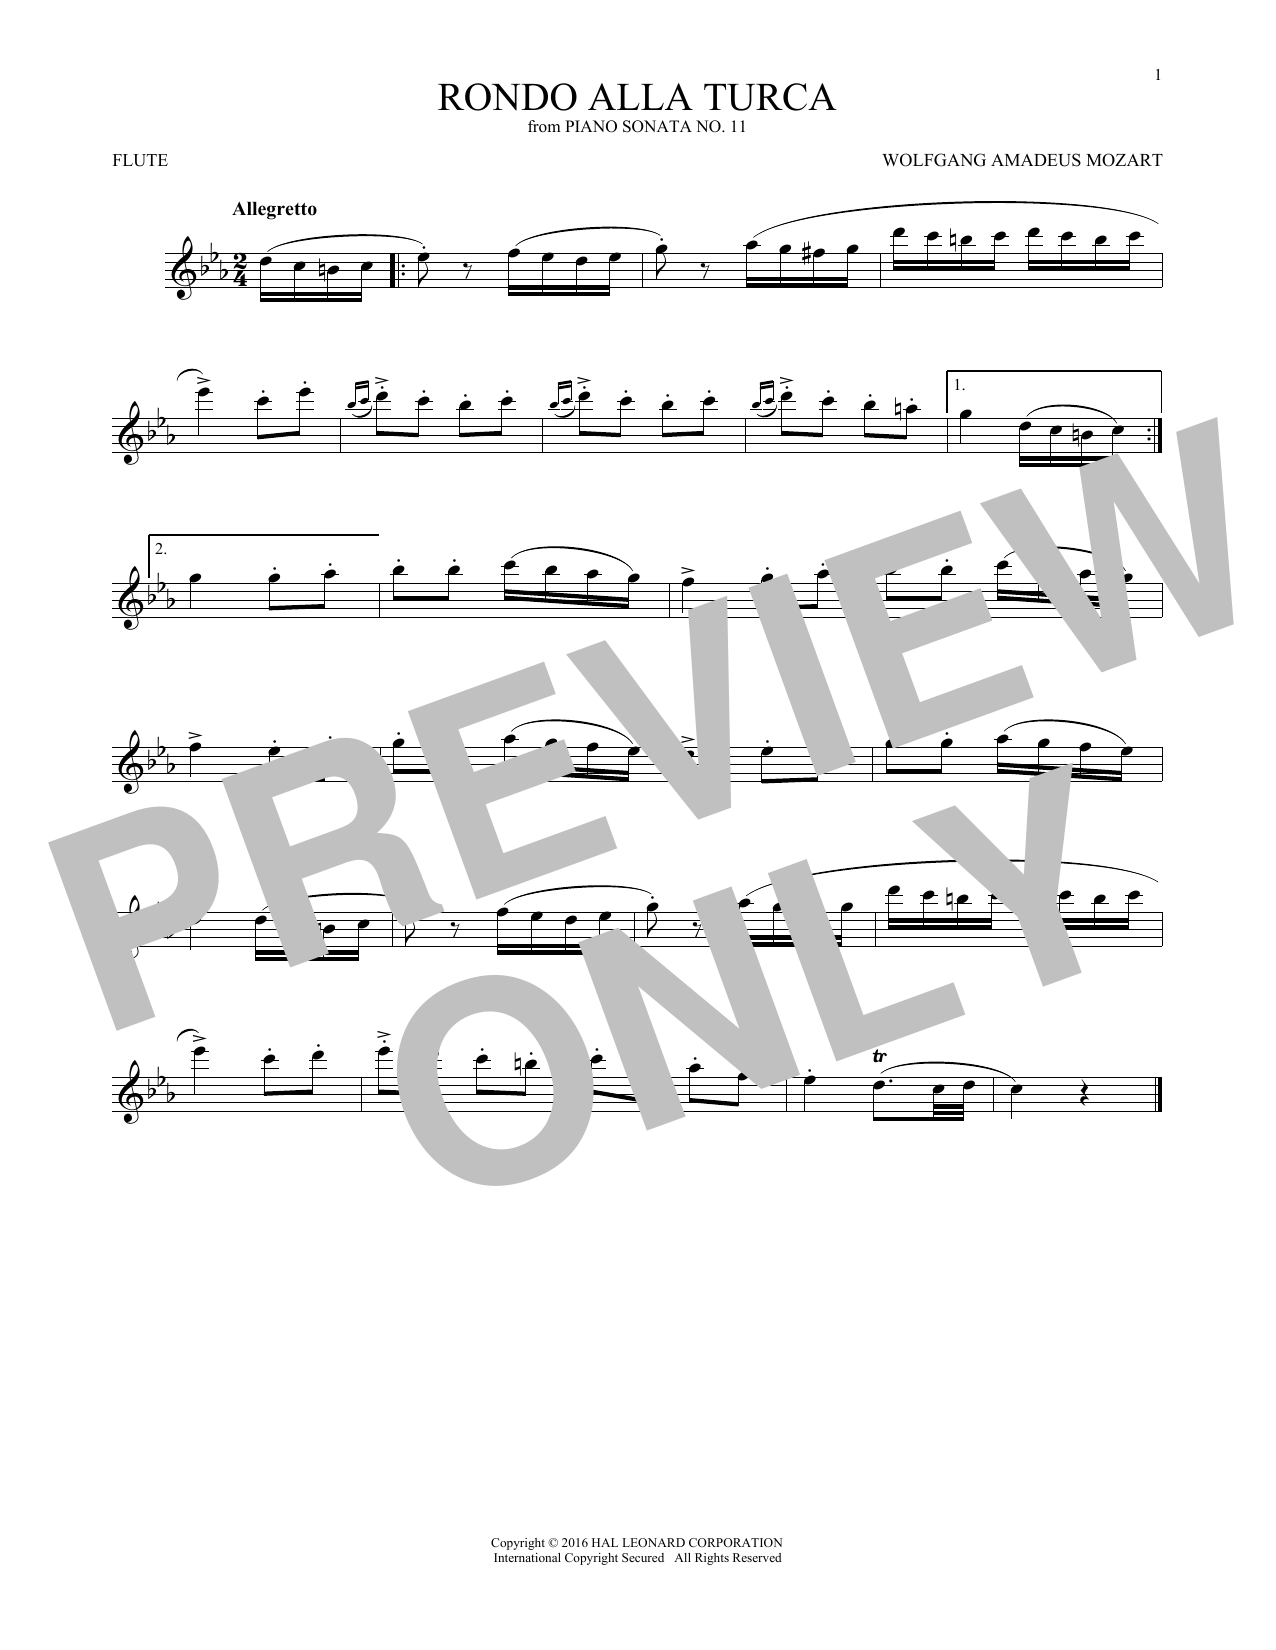 Wolfgang Amadeus Mozart Rondo Alla Turca sheet music notes printable PDF score